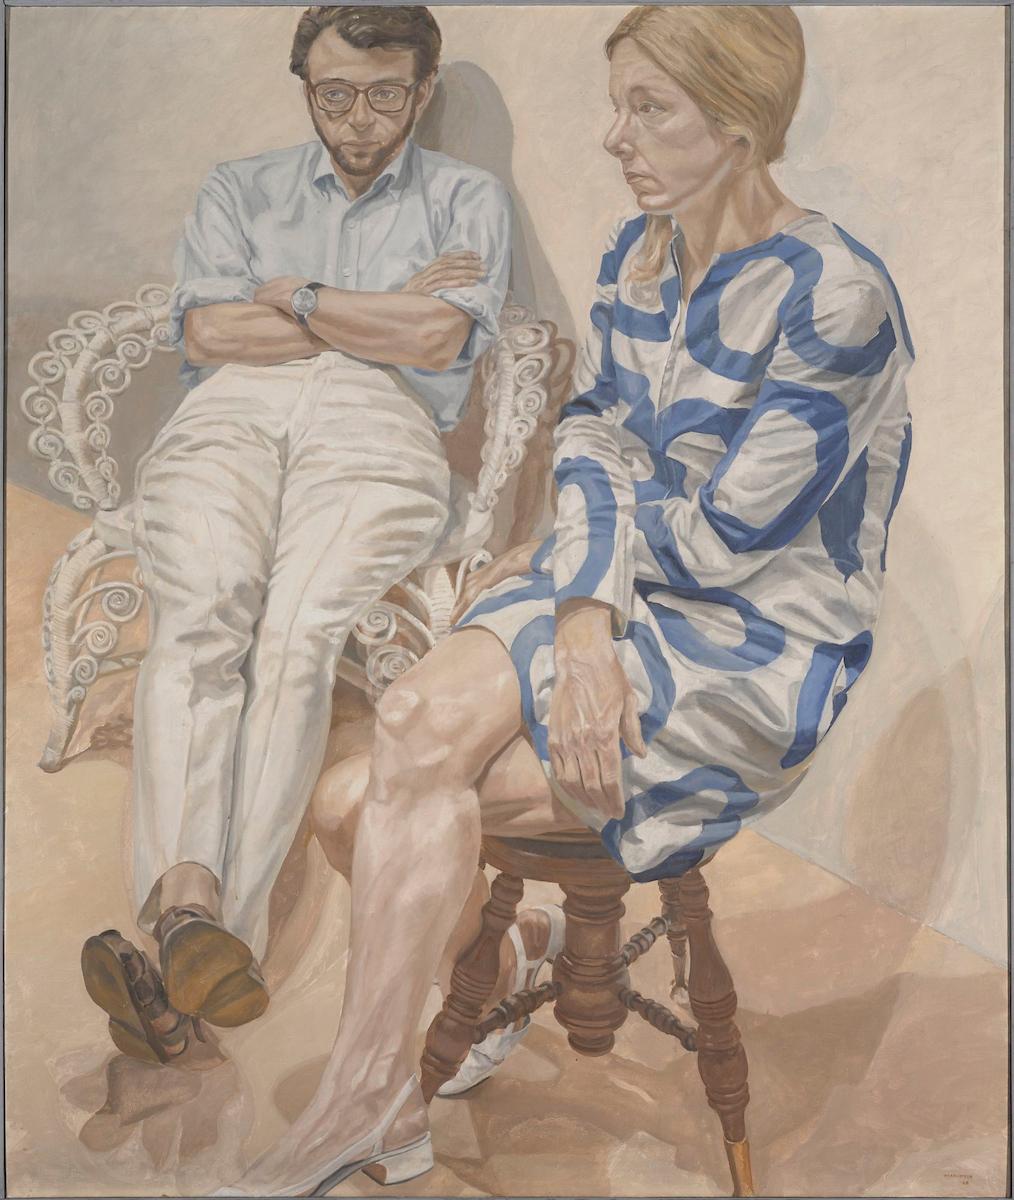 Philip Pearlstein , "Portrait of Linda Nochlin and Richard Pommer"